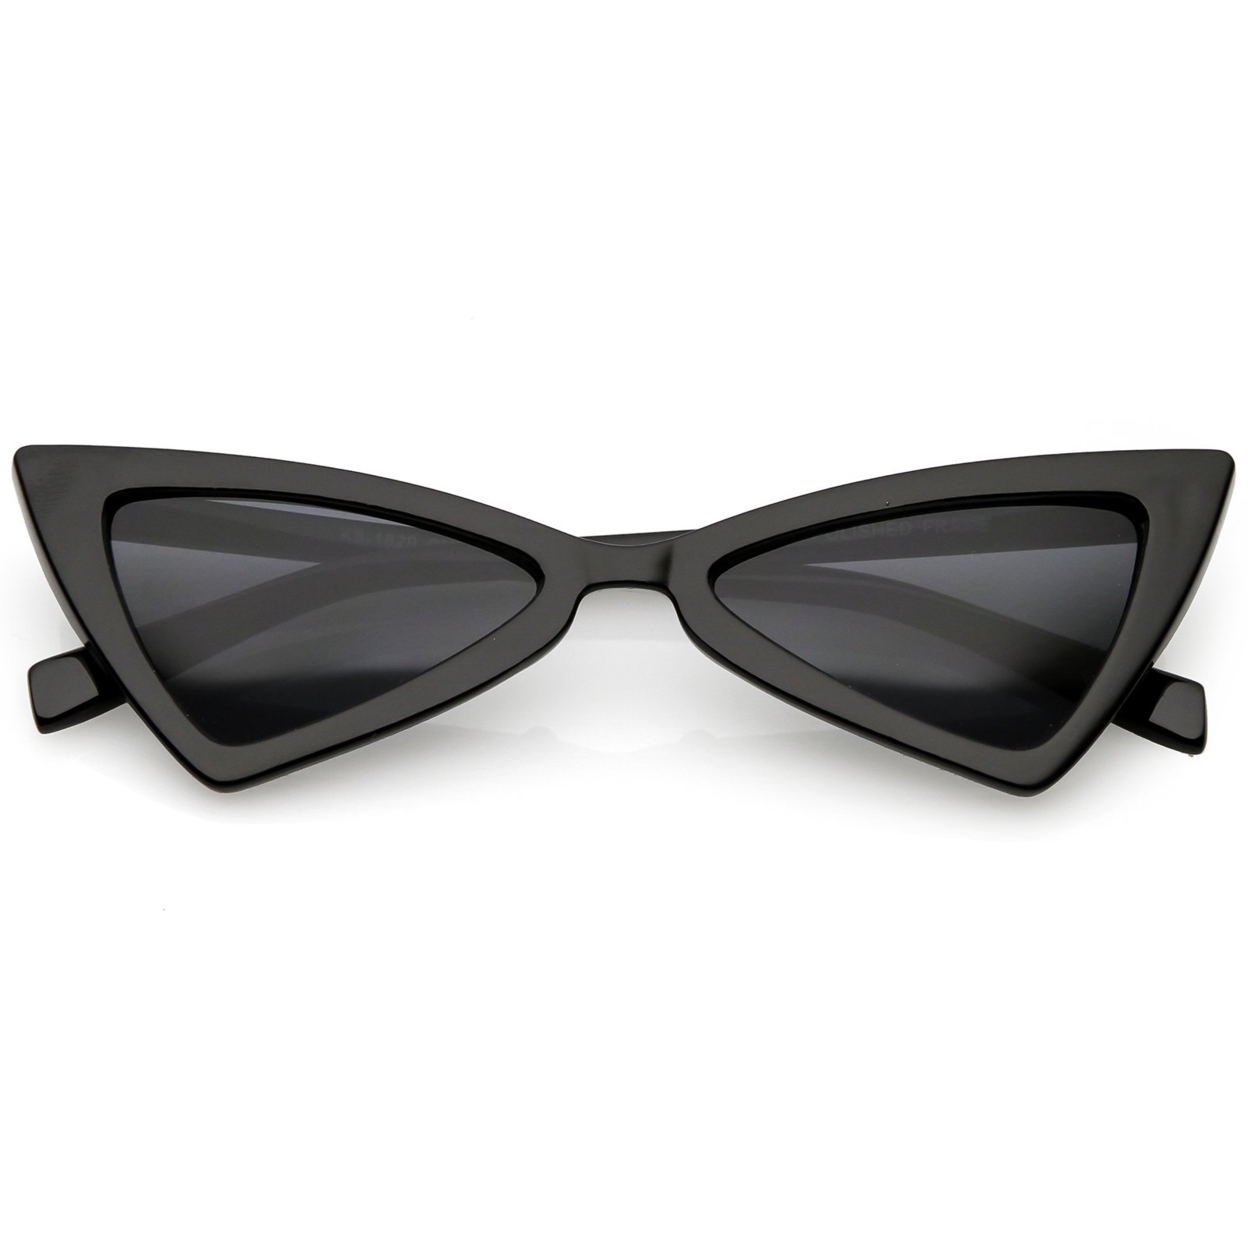 Women's Thin Extreme Cat Eye Sunglasses Neutral Colored Flat Lens 51mm - Black / Smoke